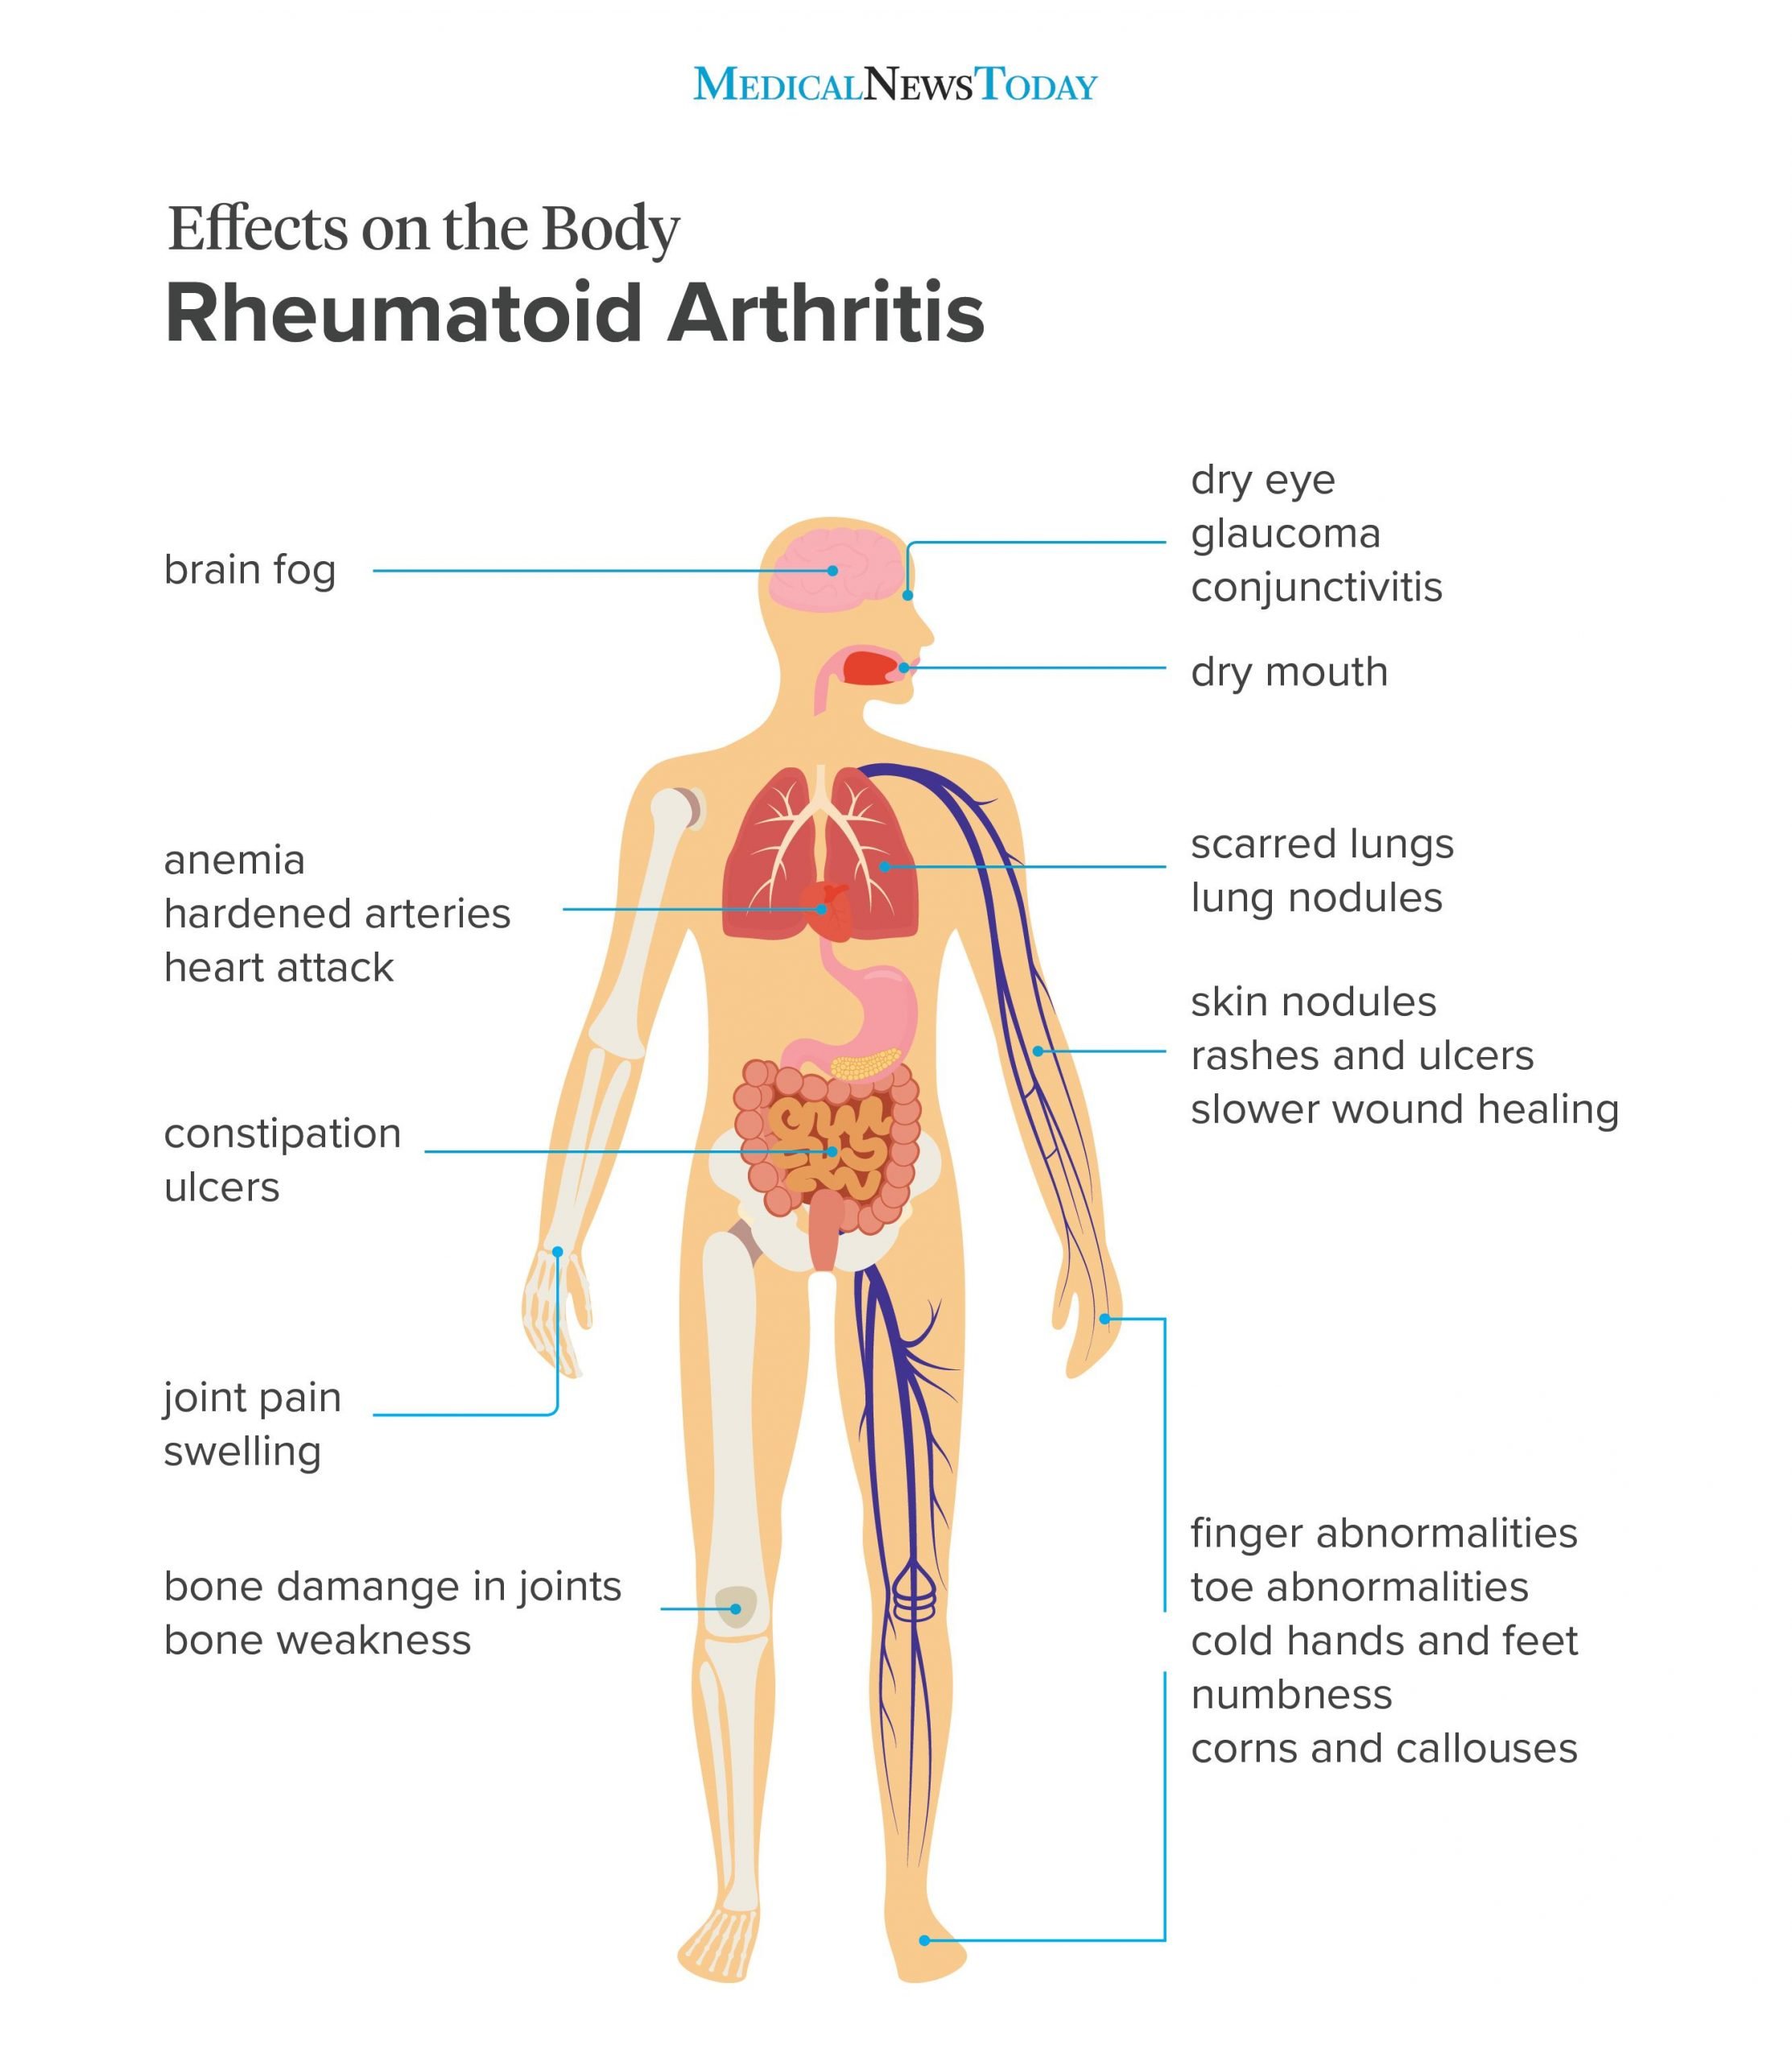 Effects of rheumatoid arthritis on the body